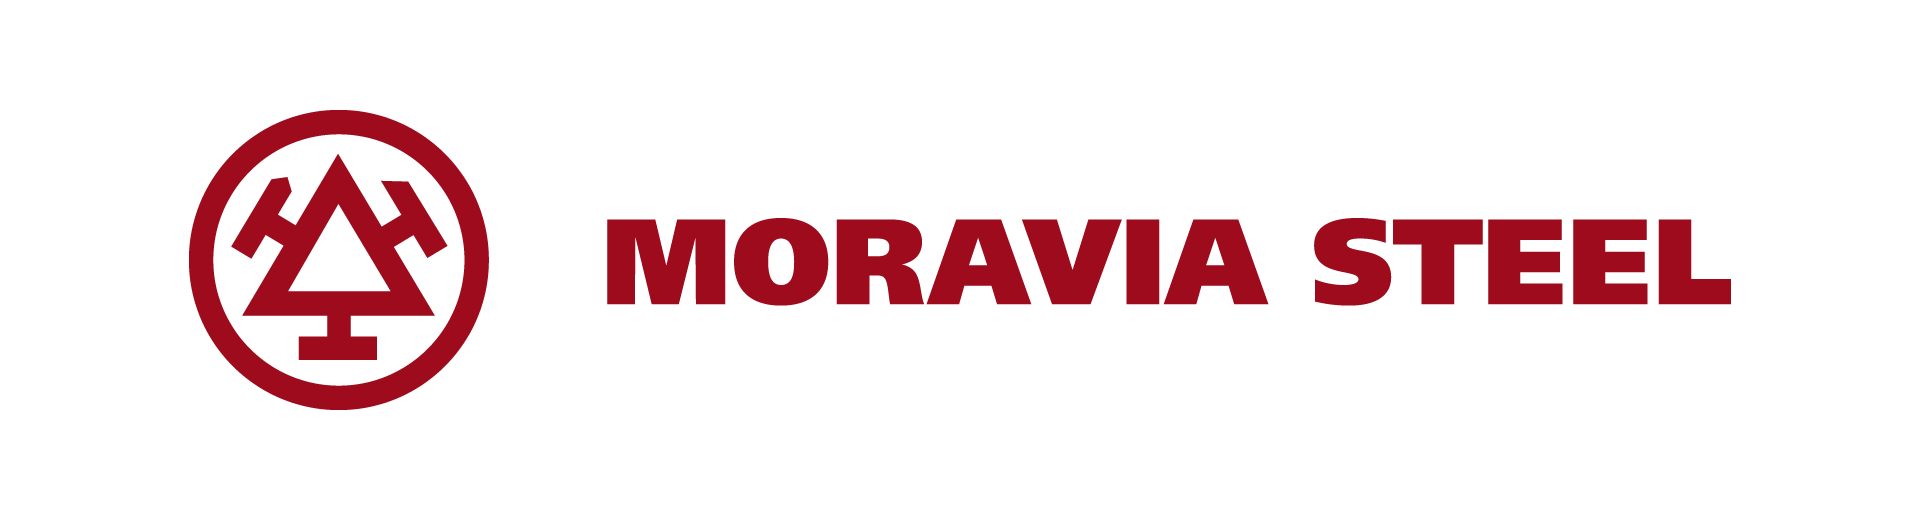 Moravia LOGO male